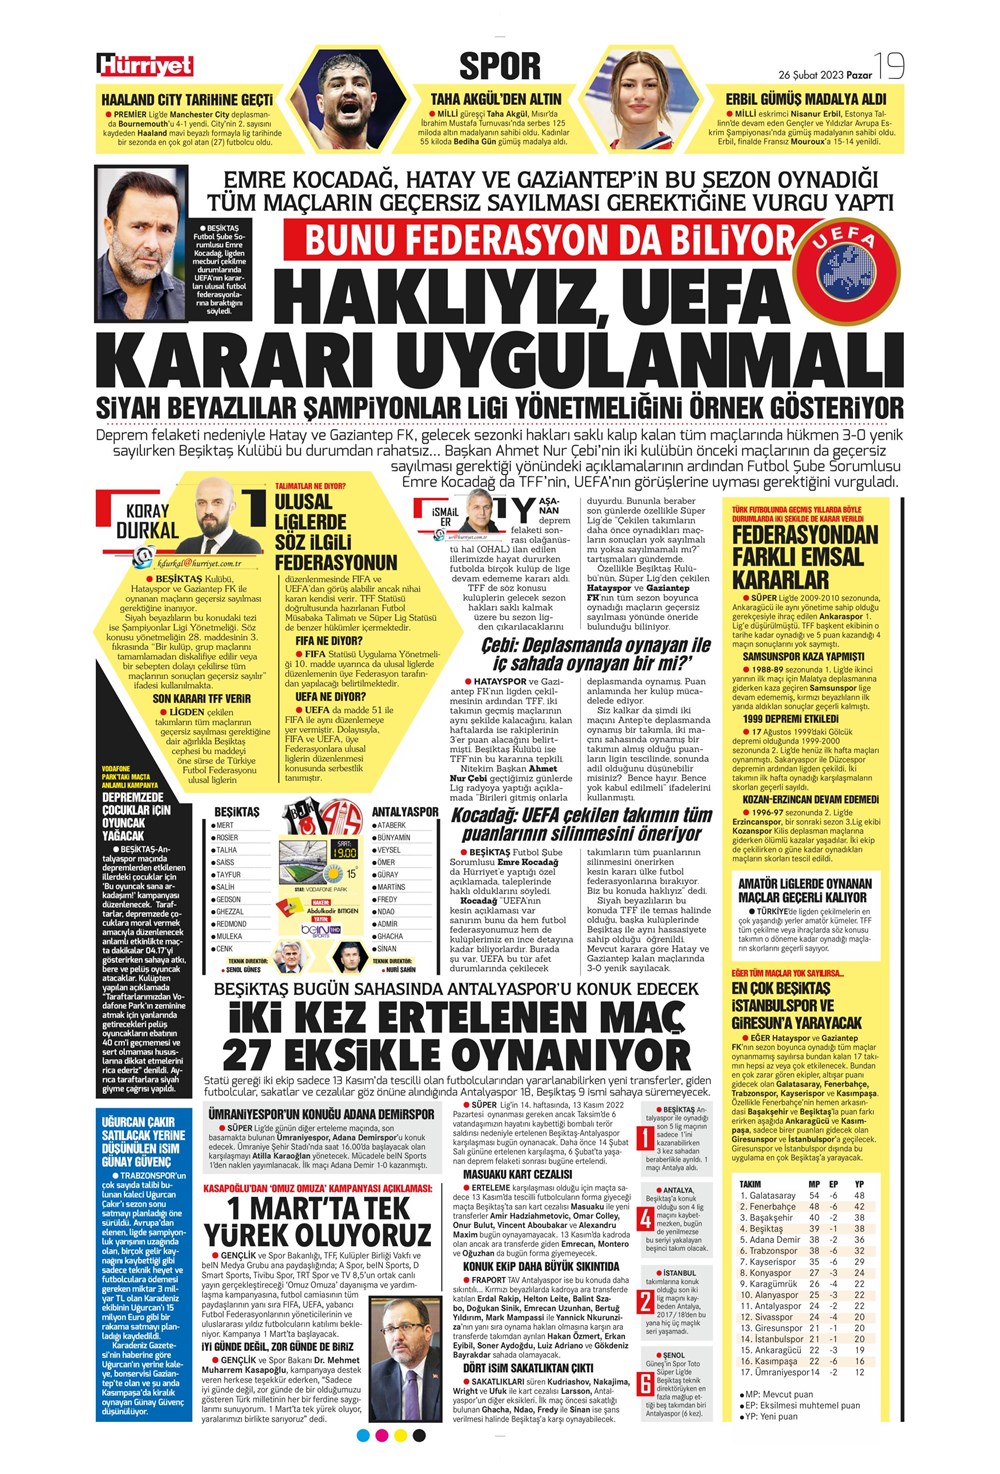 "Valenci'ağa' böyle istedi" - Sporun manşetleri  - 17. Foto